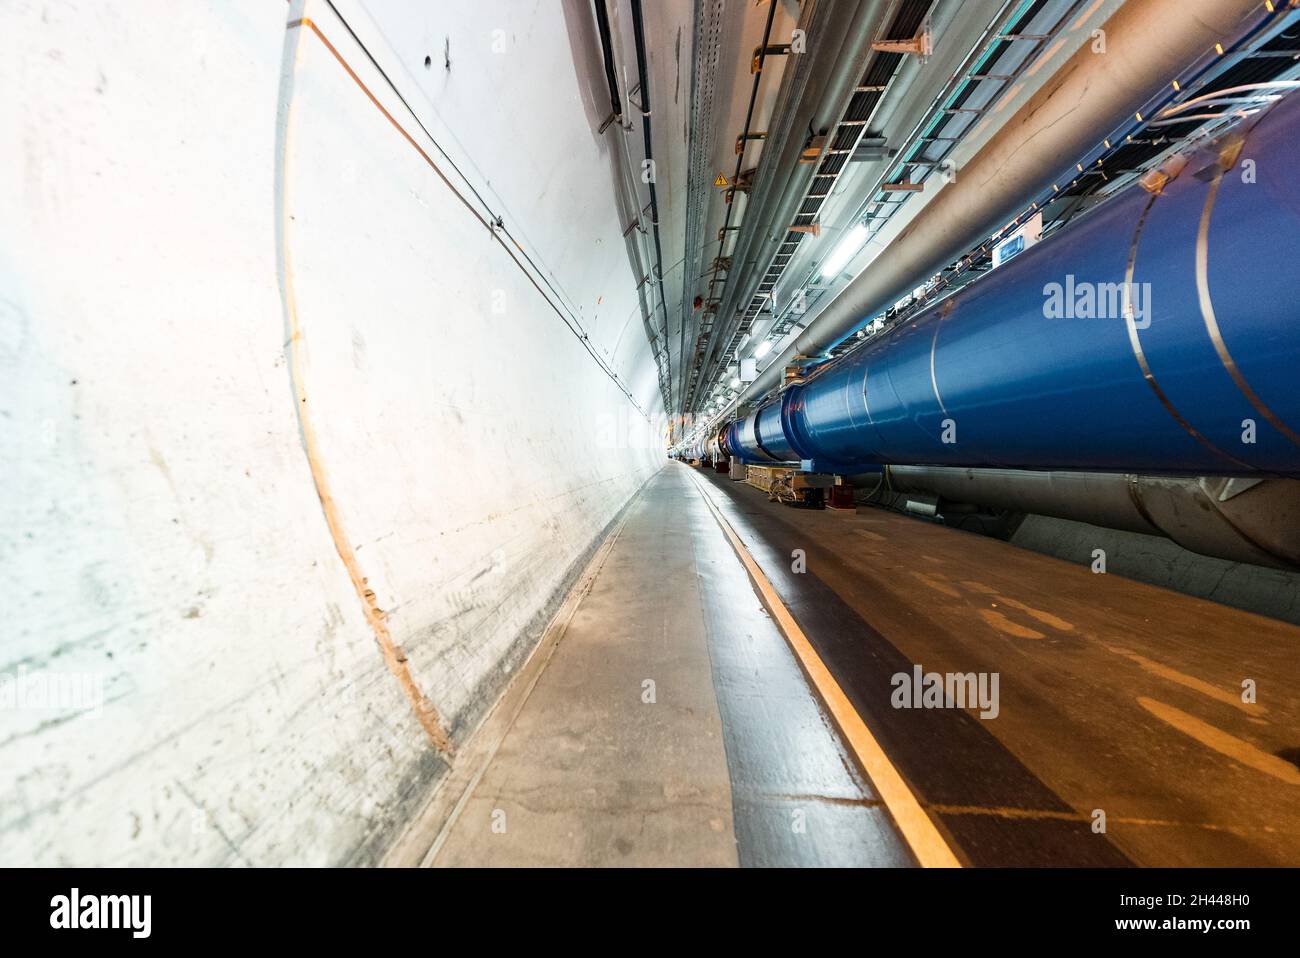 View of the LHC particle accelerator CERN, Geneva, Switzerland Stock Photo